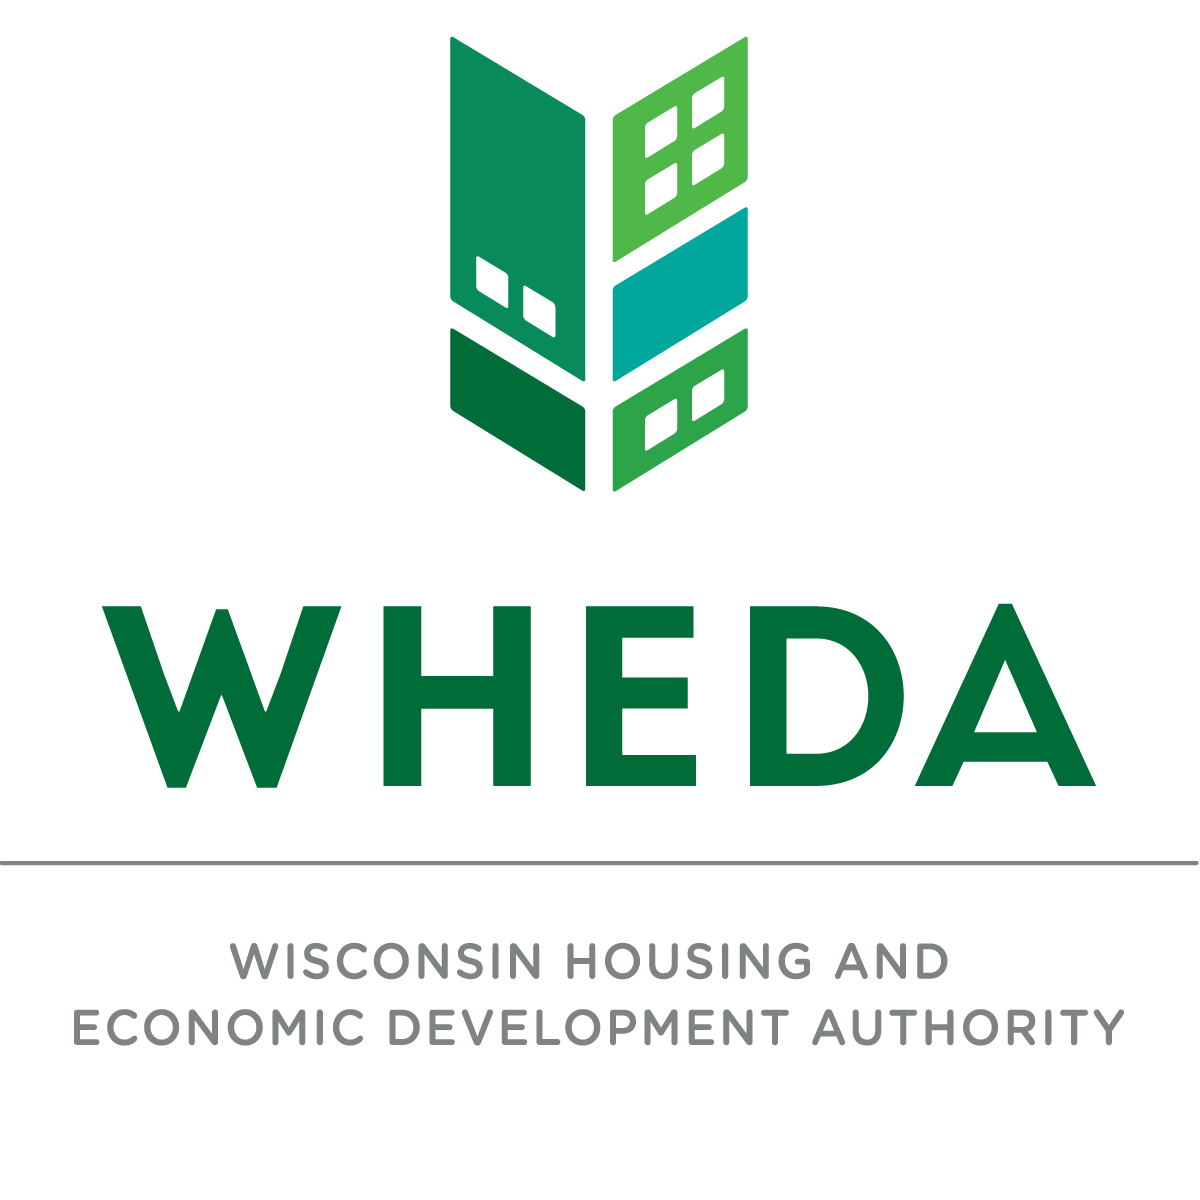 WHEDA logo